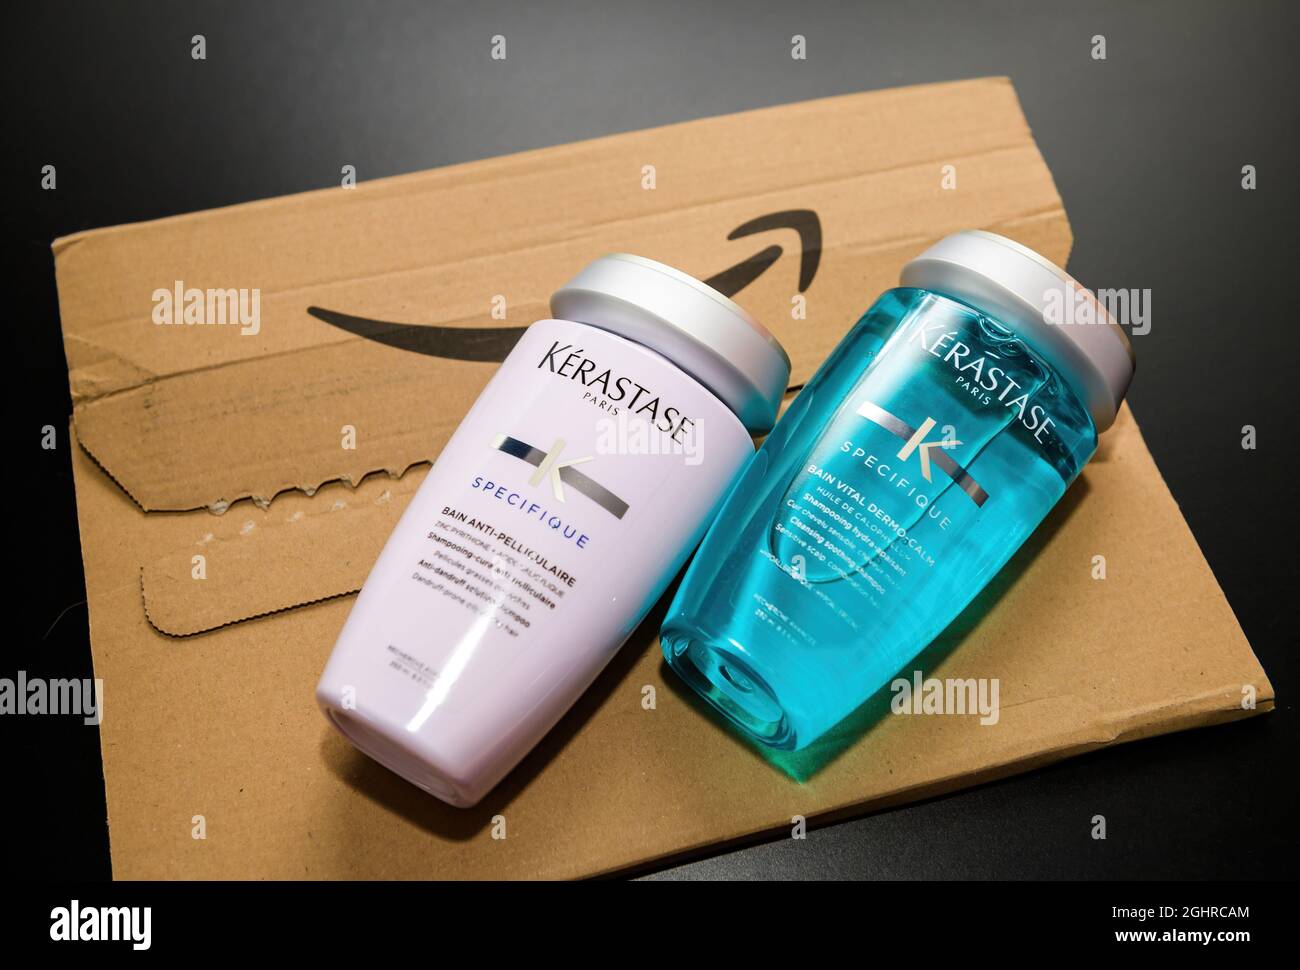 new Kerastase Paris shampoo above the cardboard Amazon Prime packaging  Stock Photo - Alamy